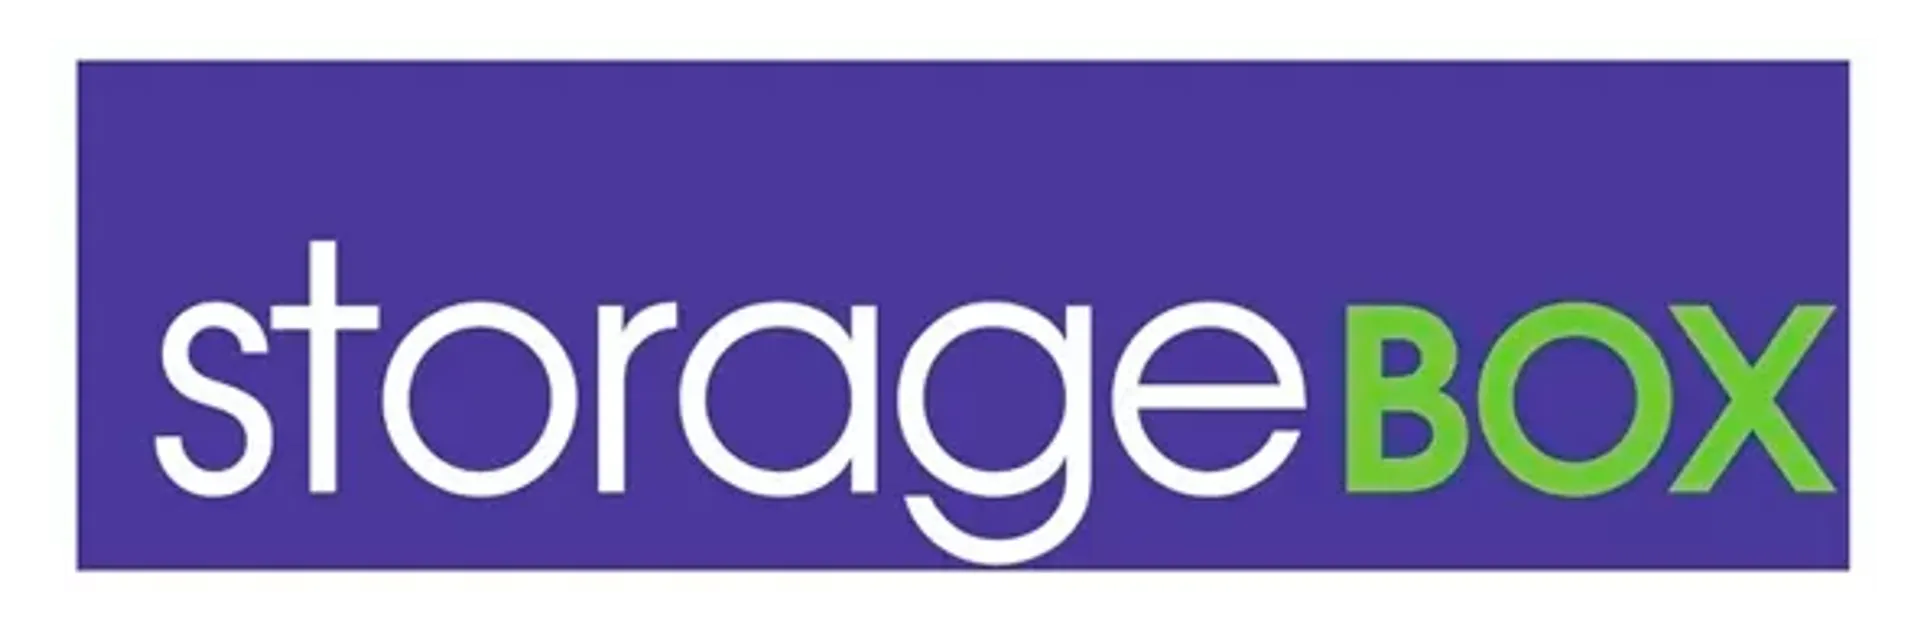 STORAGE BOX logo. Current weekly ad